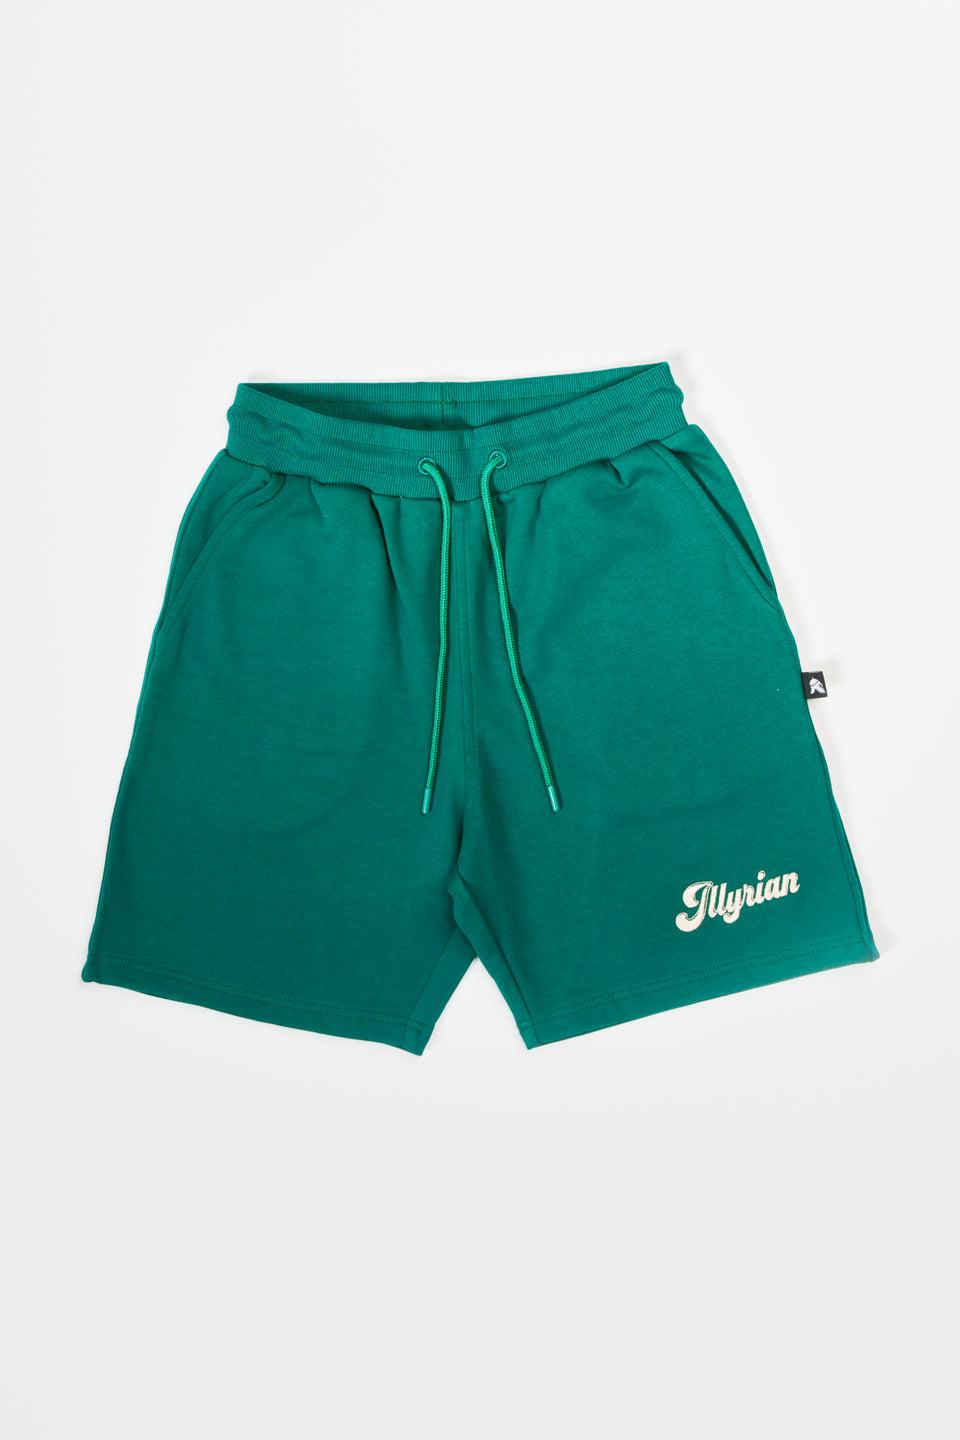 Illyrian Cotton Shorts - Green